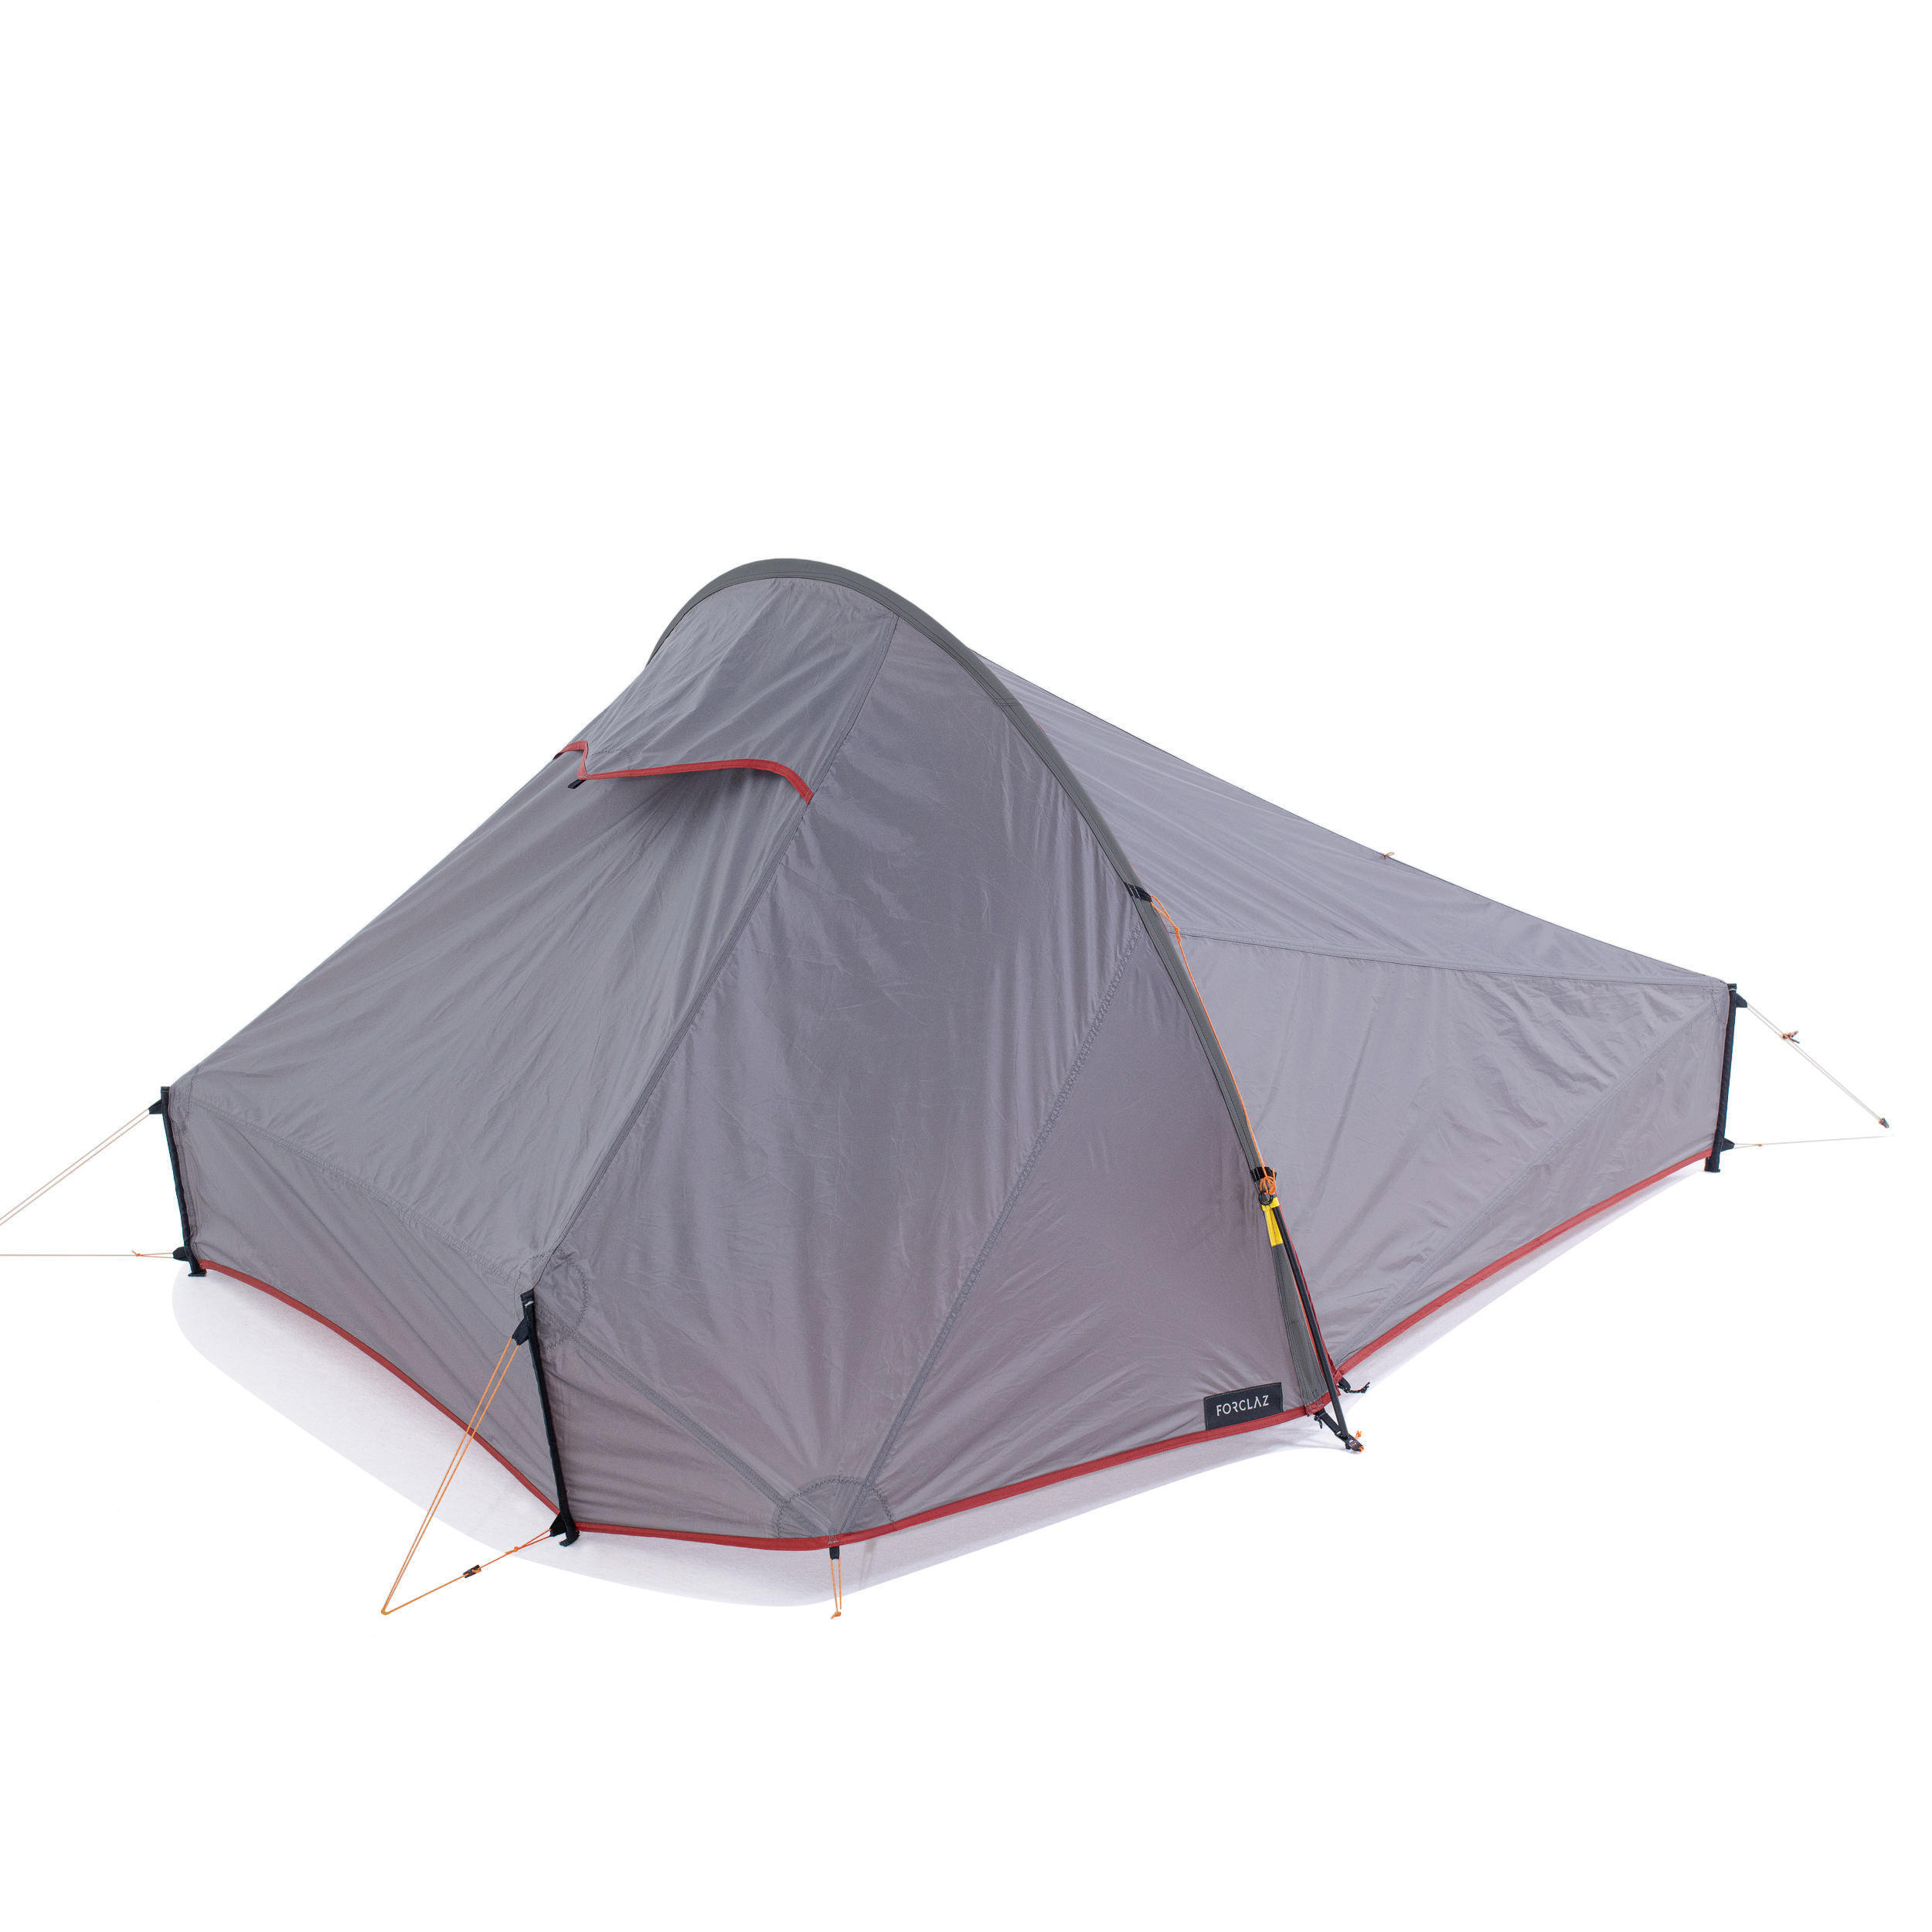 Tunnel Trekking Tent - 2 person - MT900 Ultralight 4/12